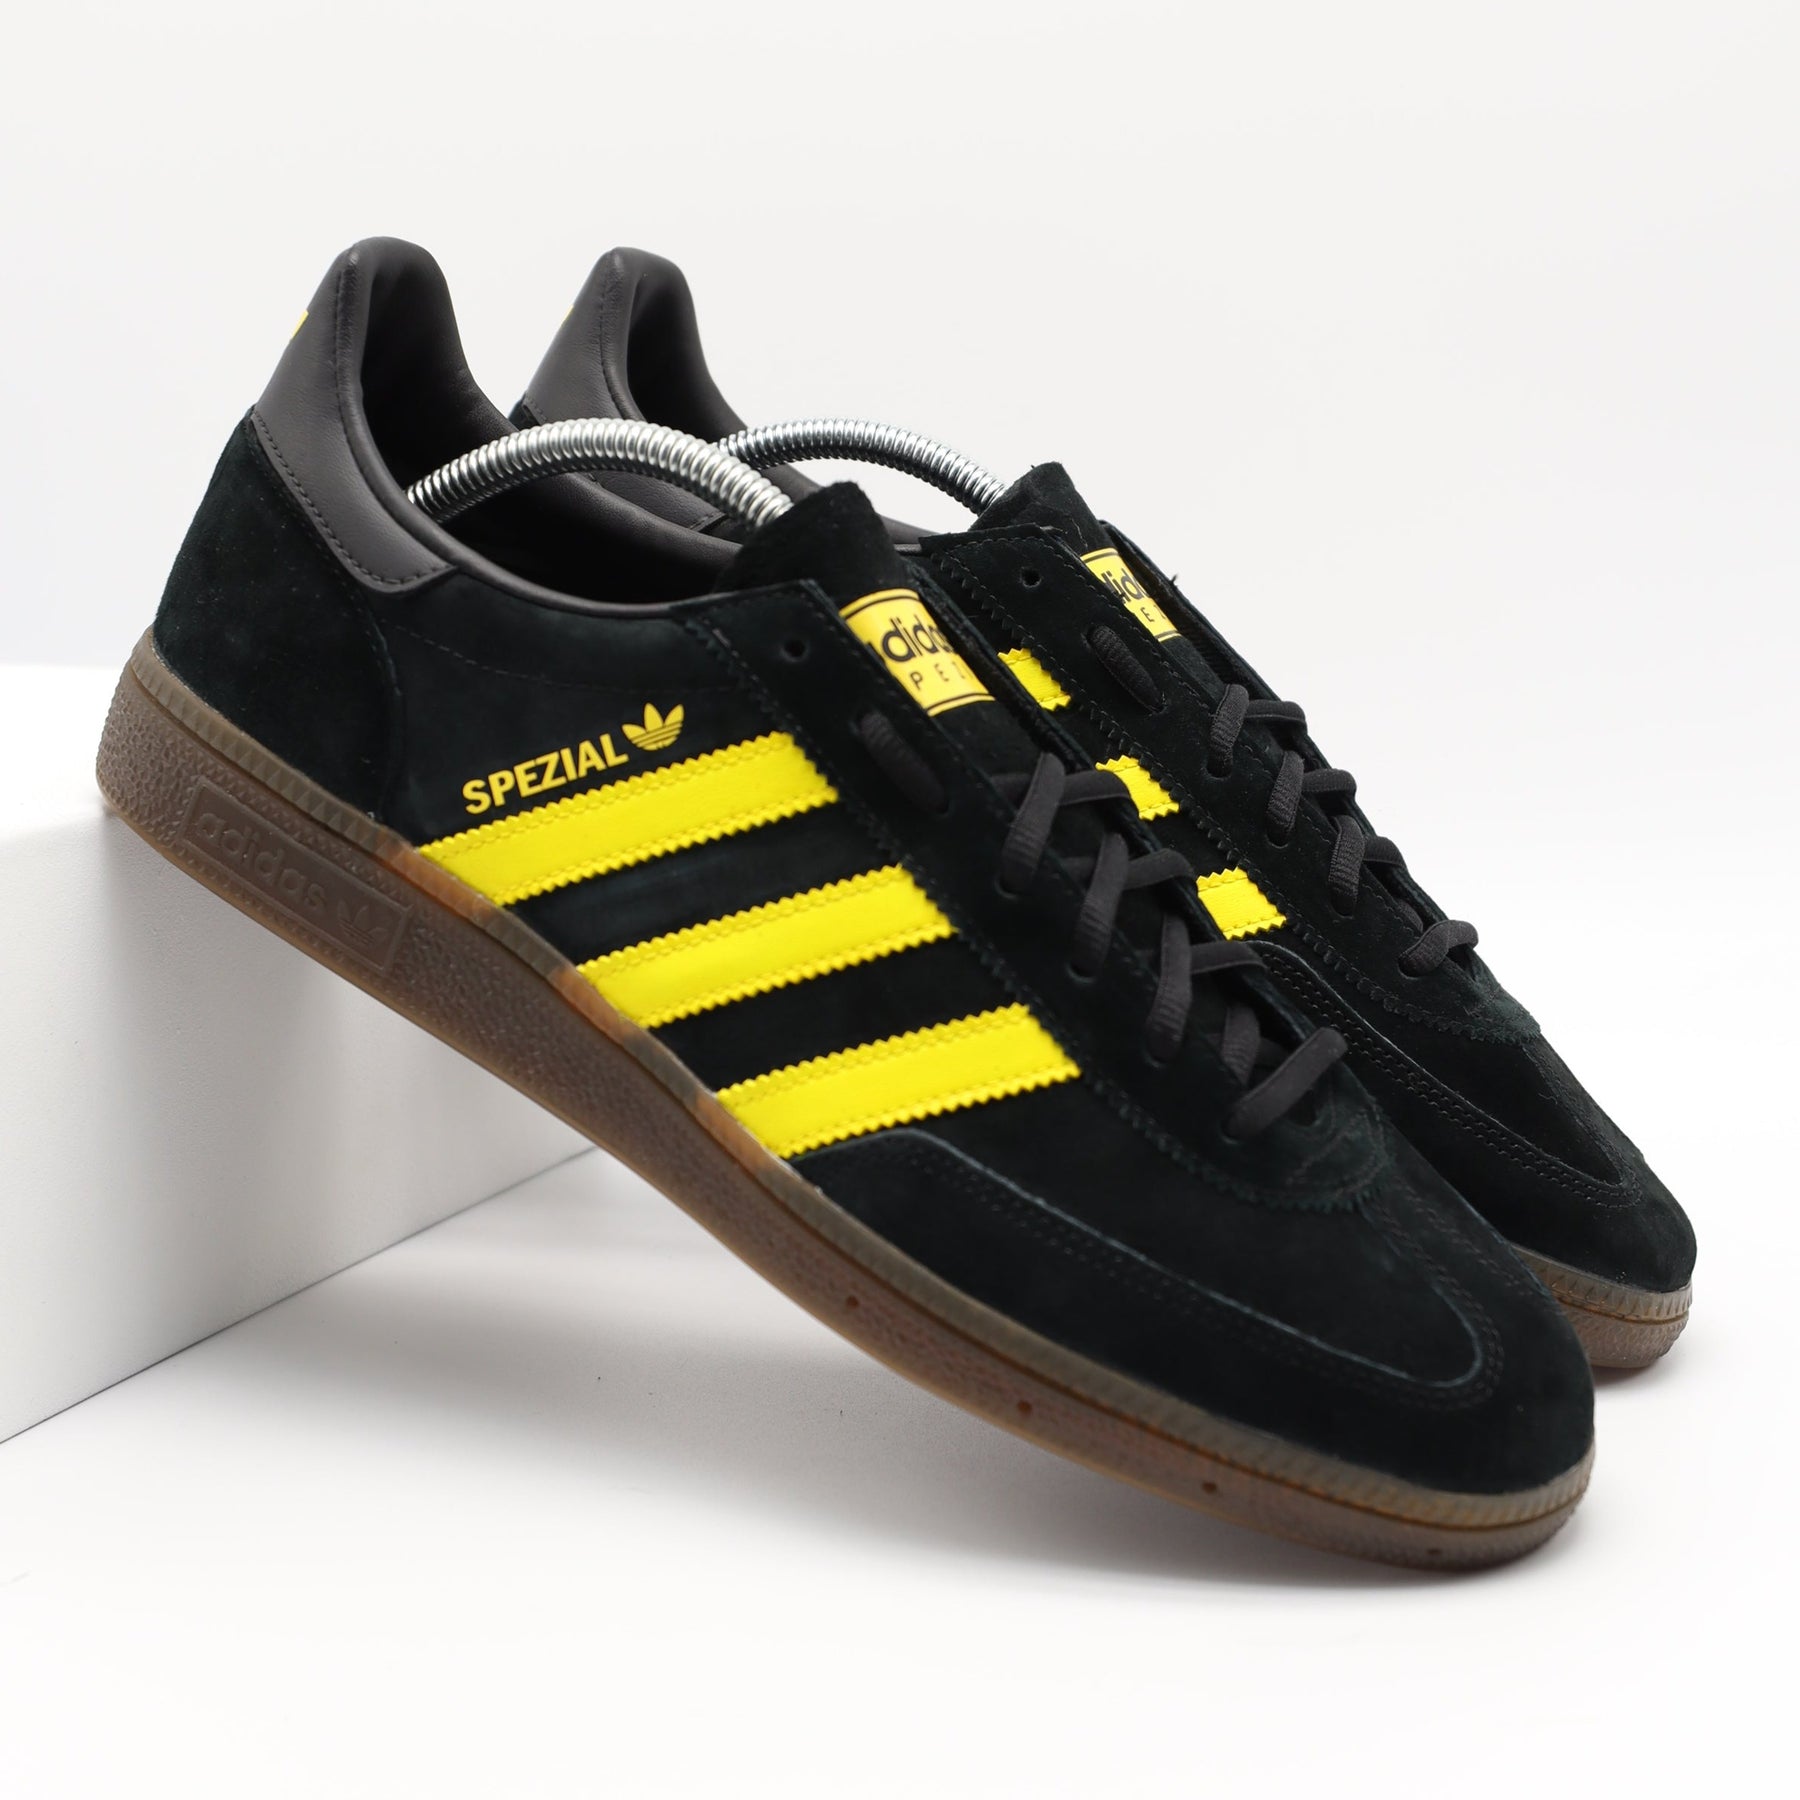 Adidas Spezial - Yellow & Black PlatinumShoeCare